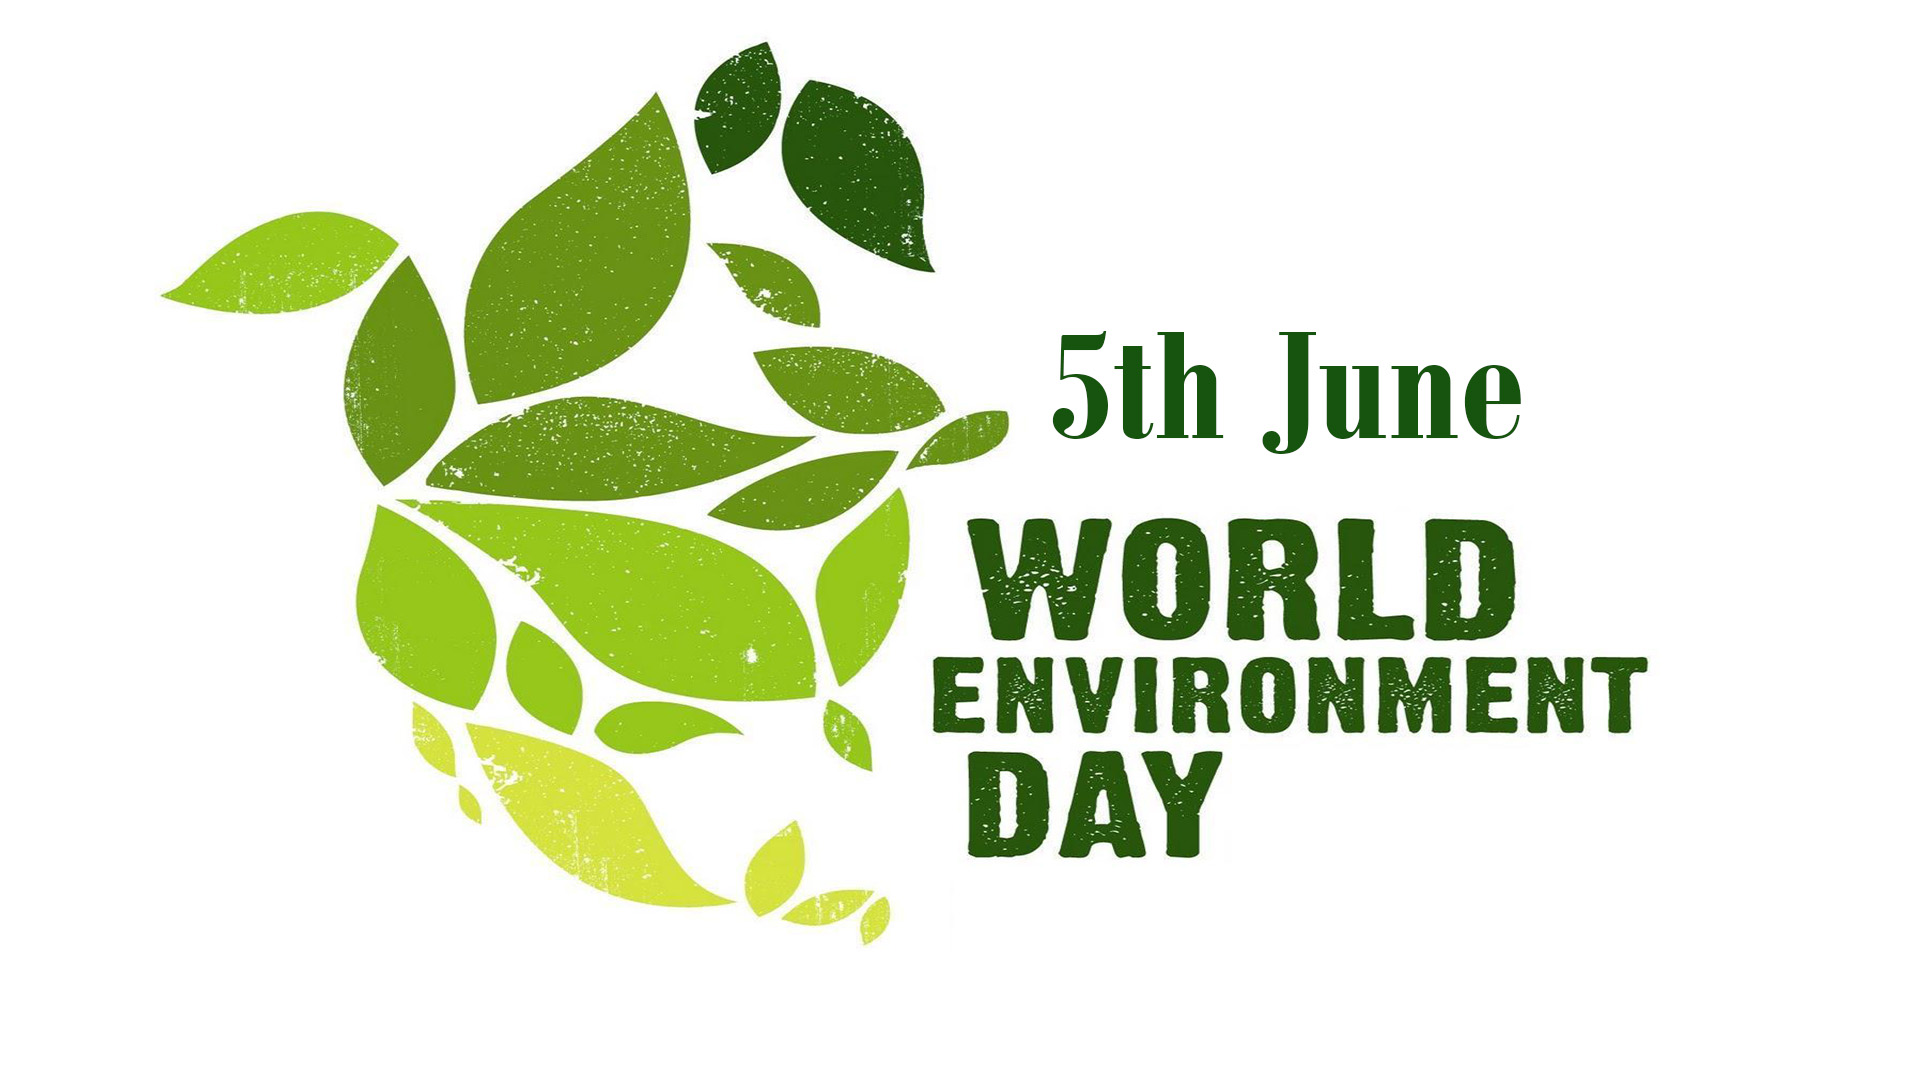 world environment day 2018 image